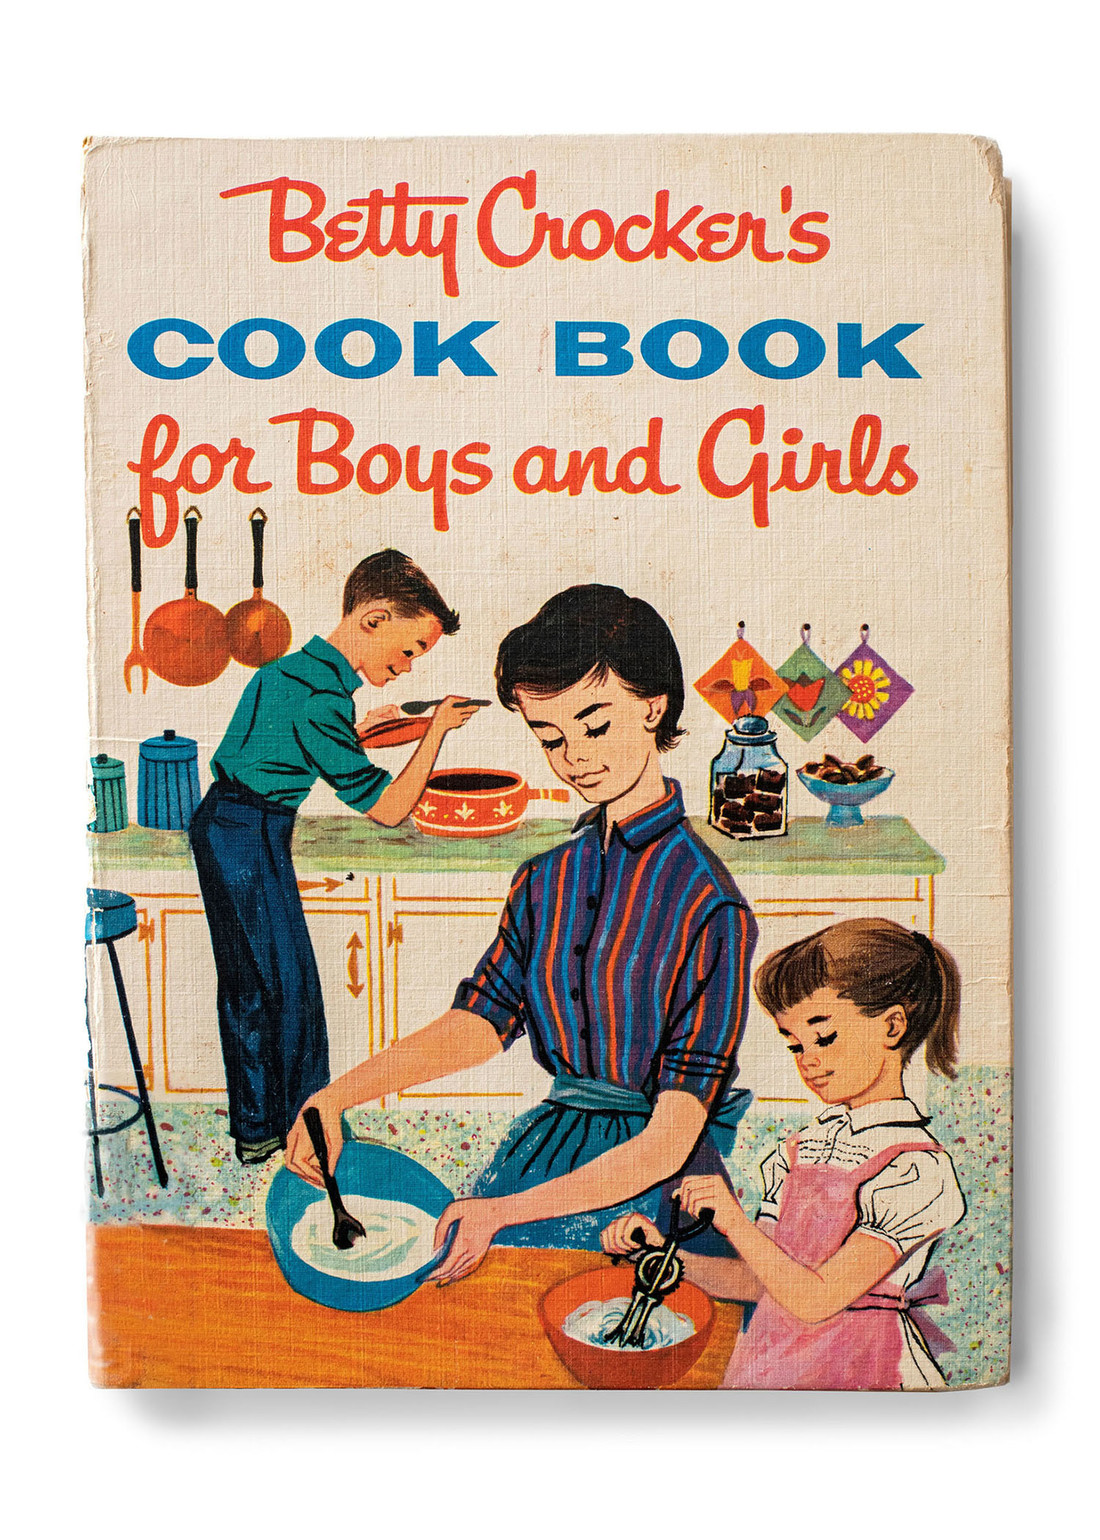 Betty Crocker's cookbook for boys and girls